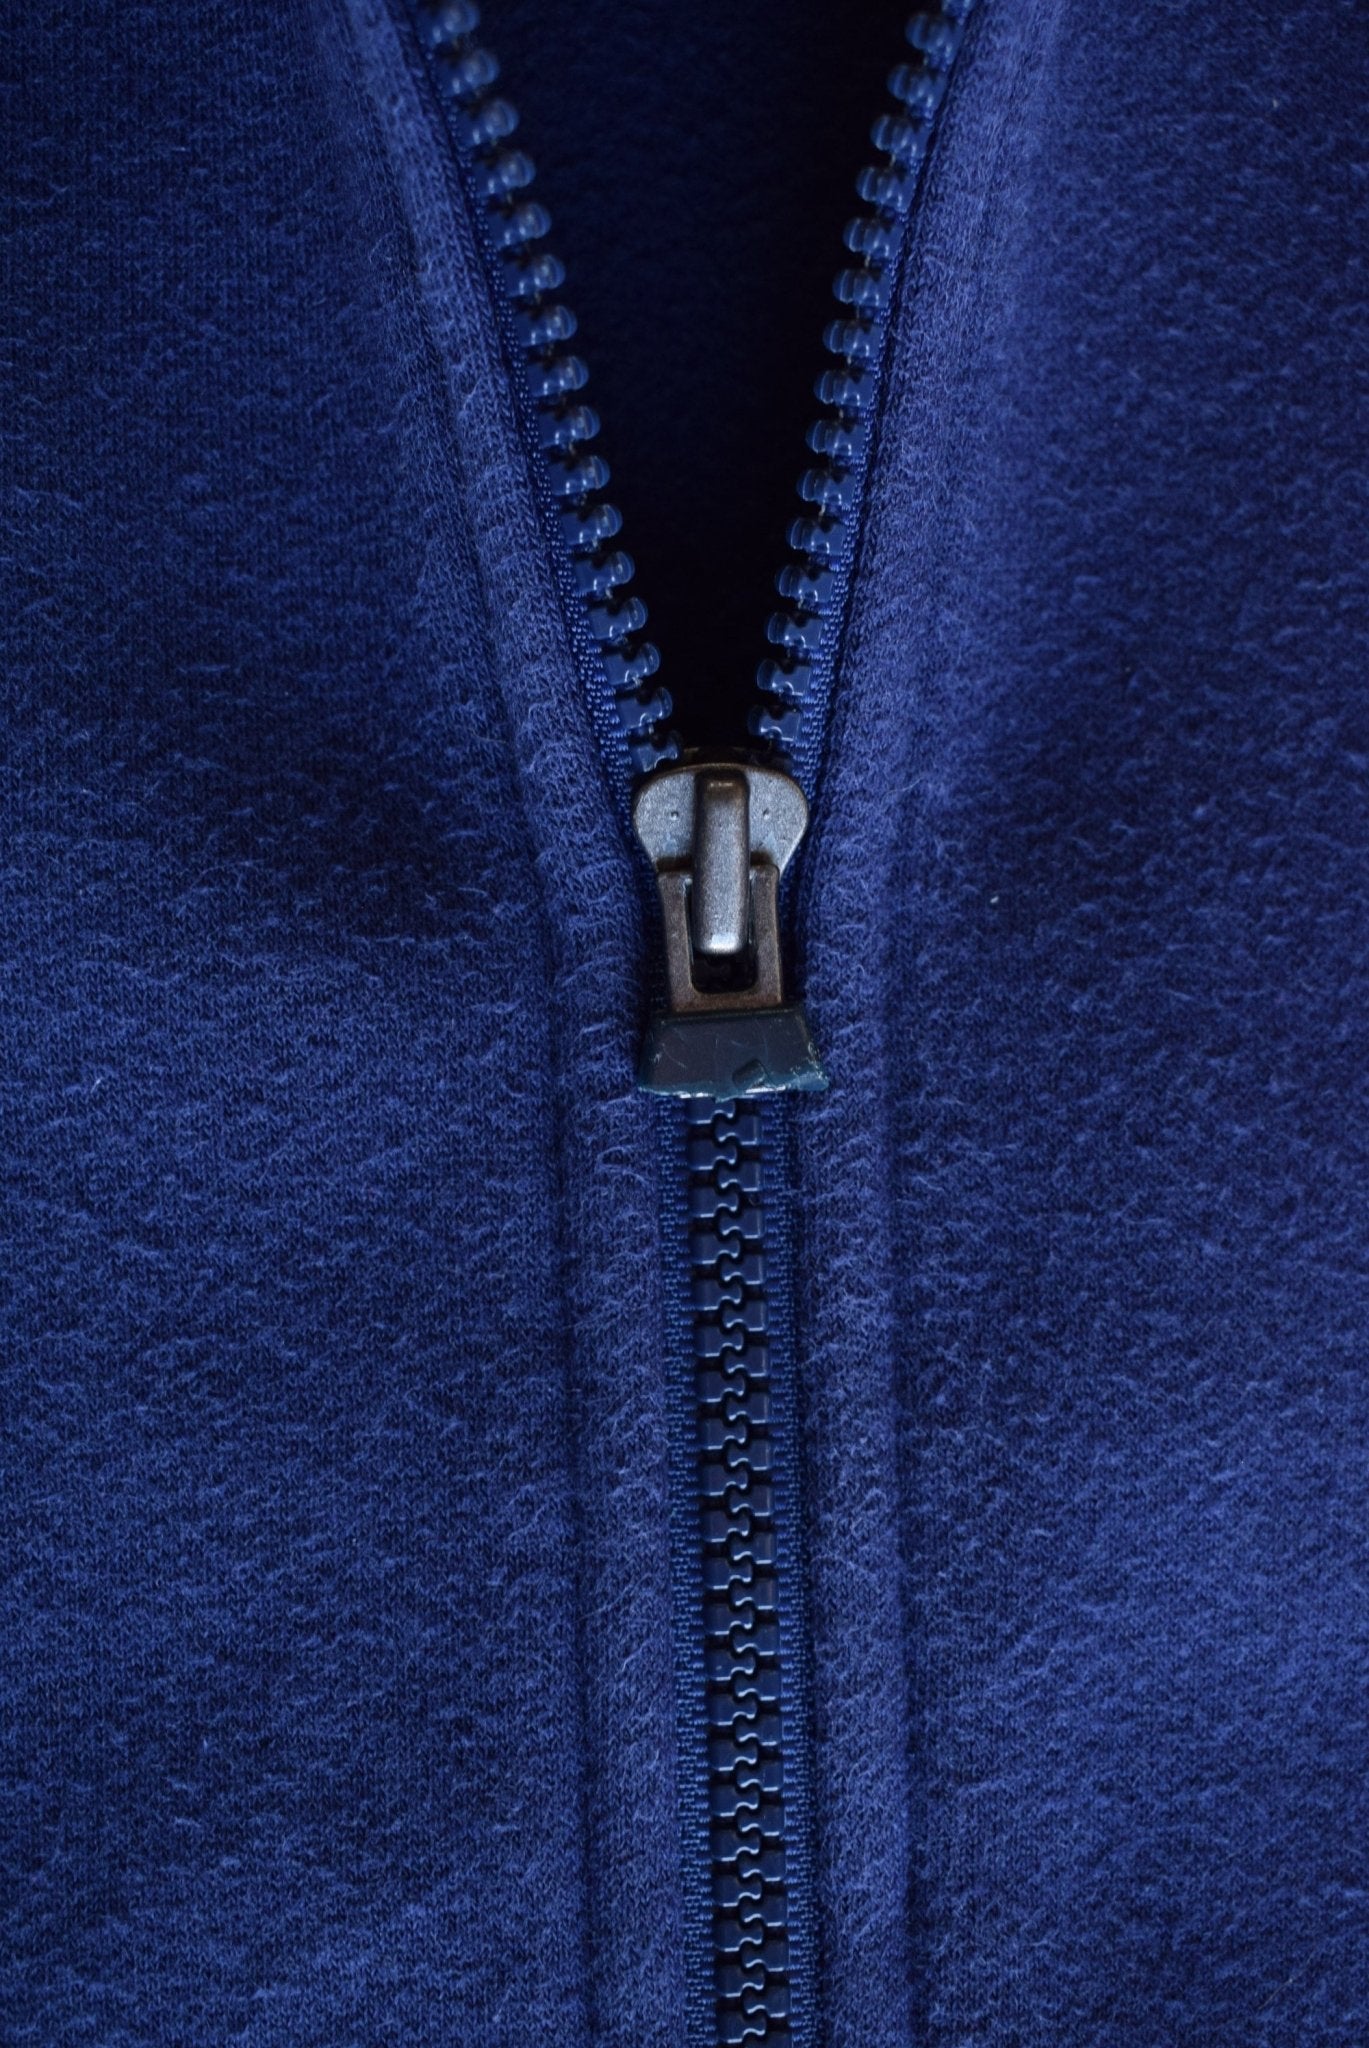 Vintage Adidas Classic Logo Full Zip Sweatshirt (M/L) - Retrospective Store